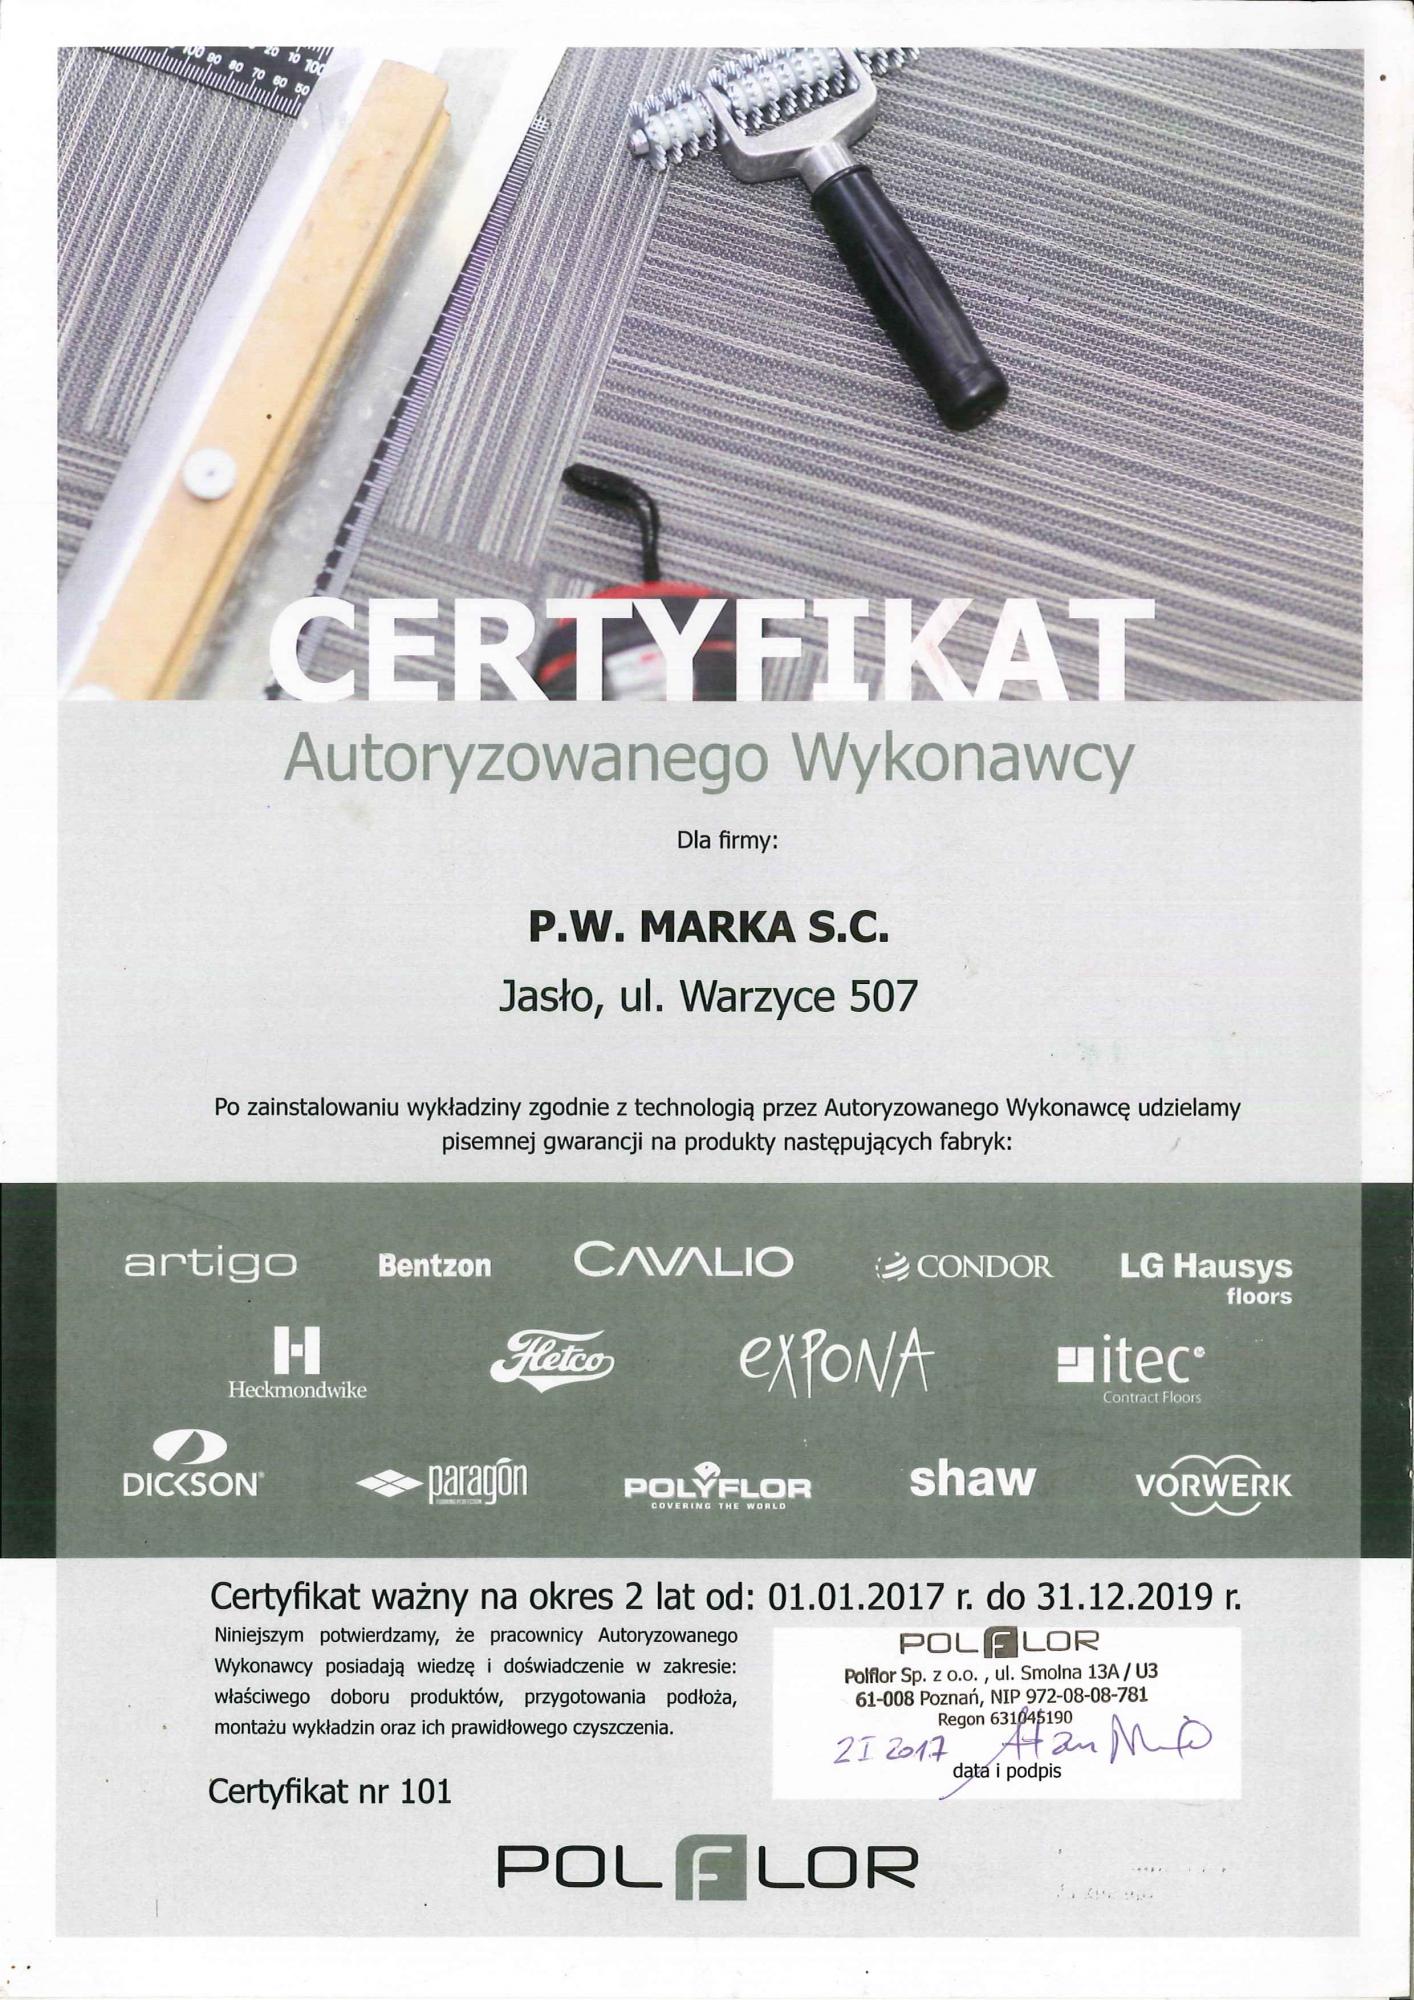 Certyfikat polflor 2017